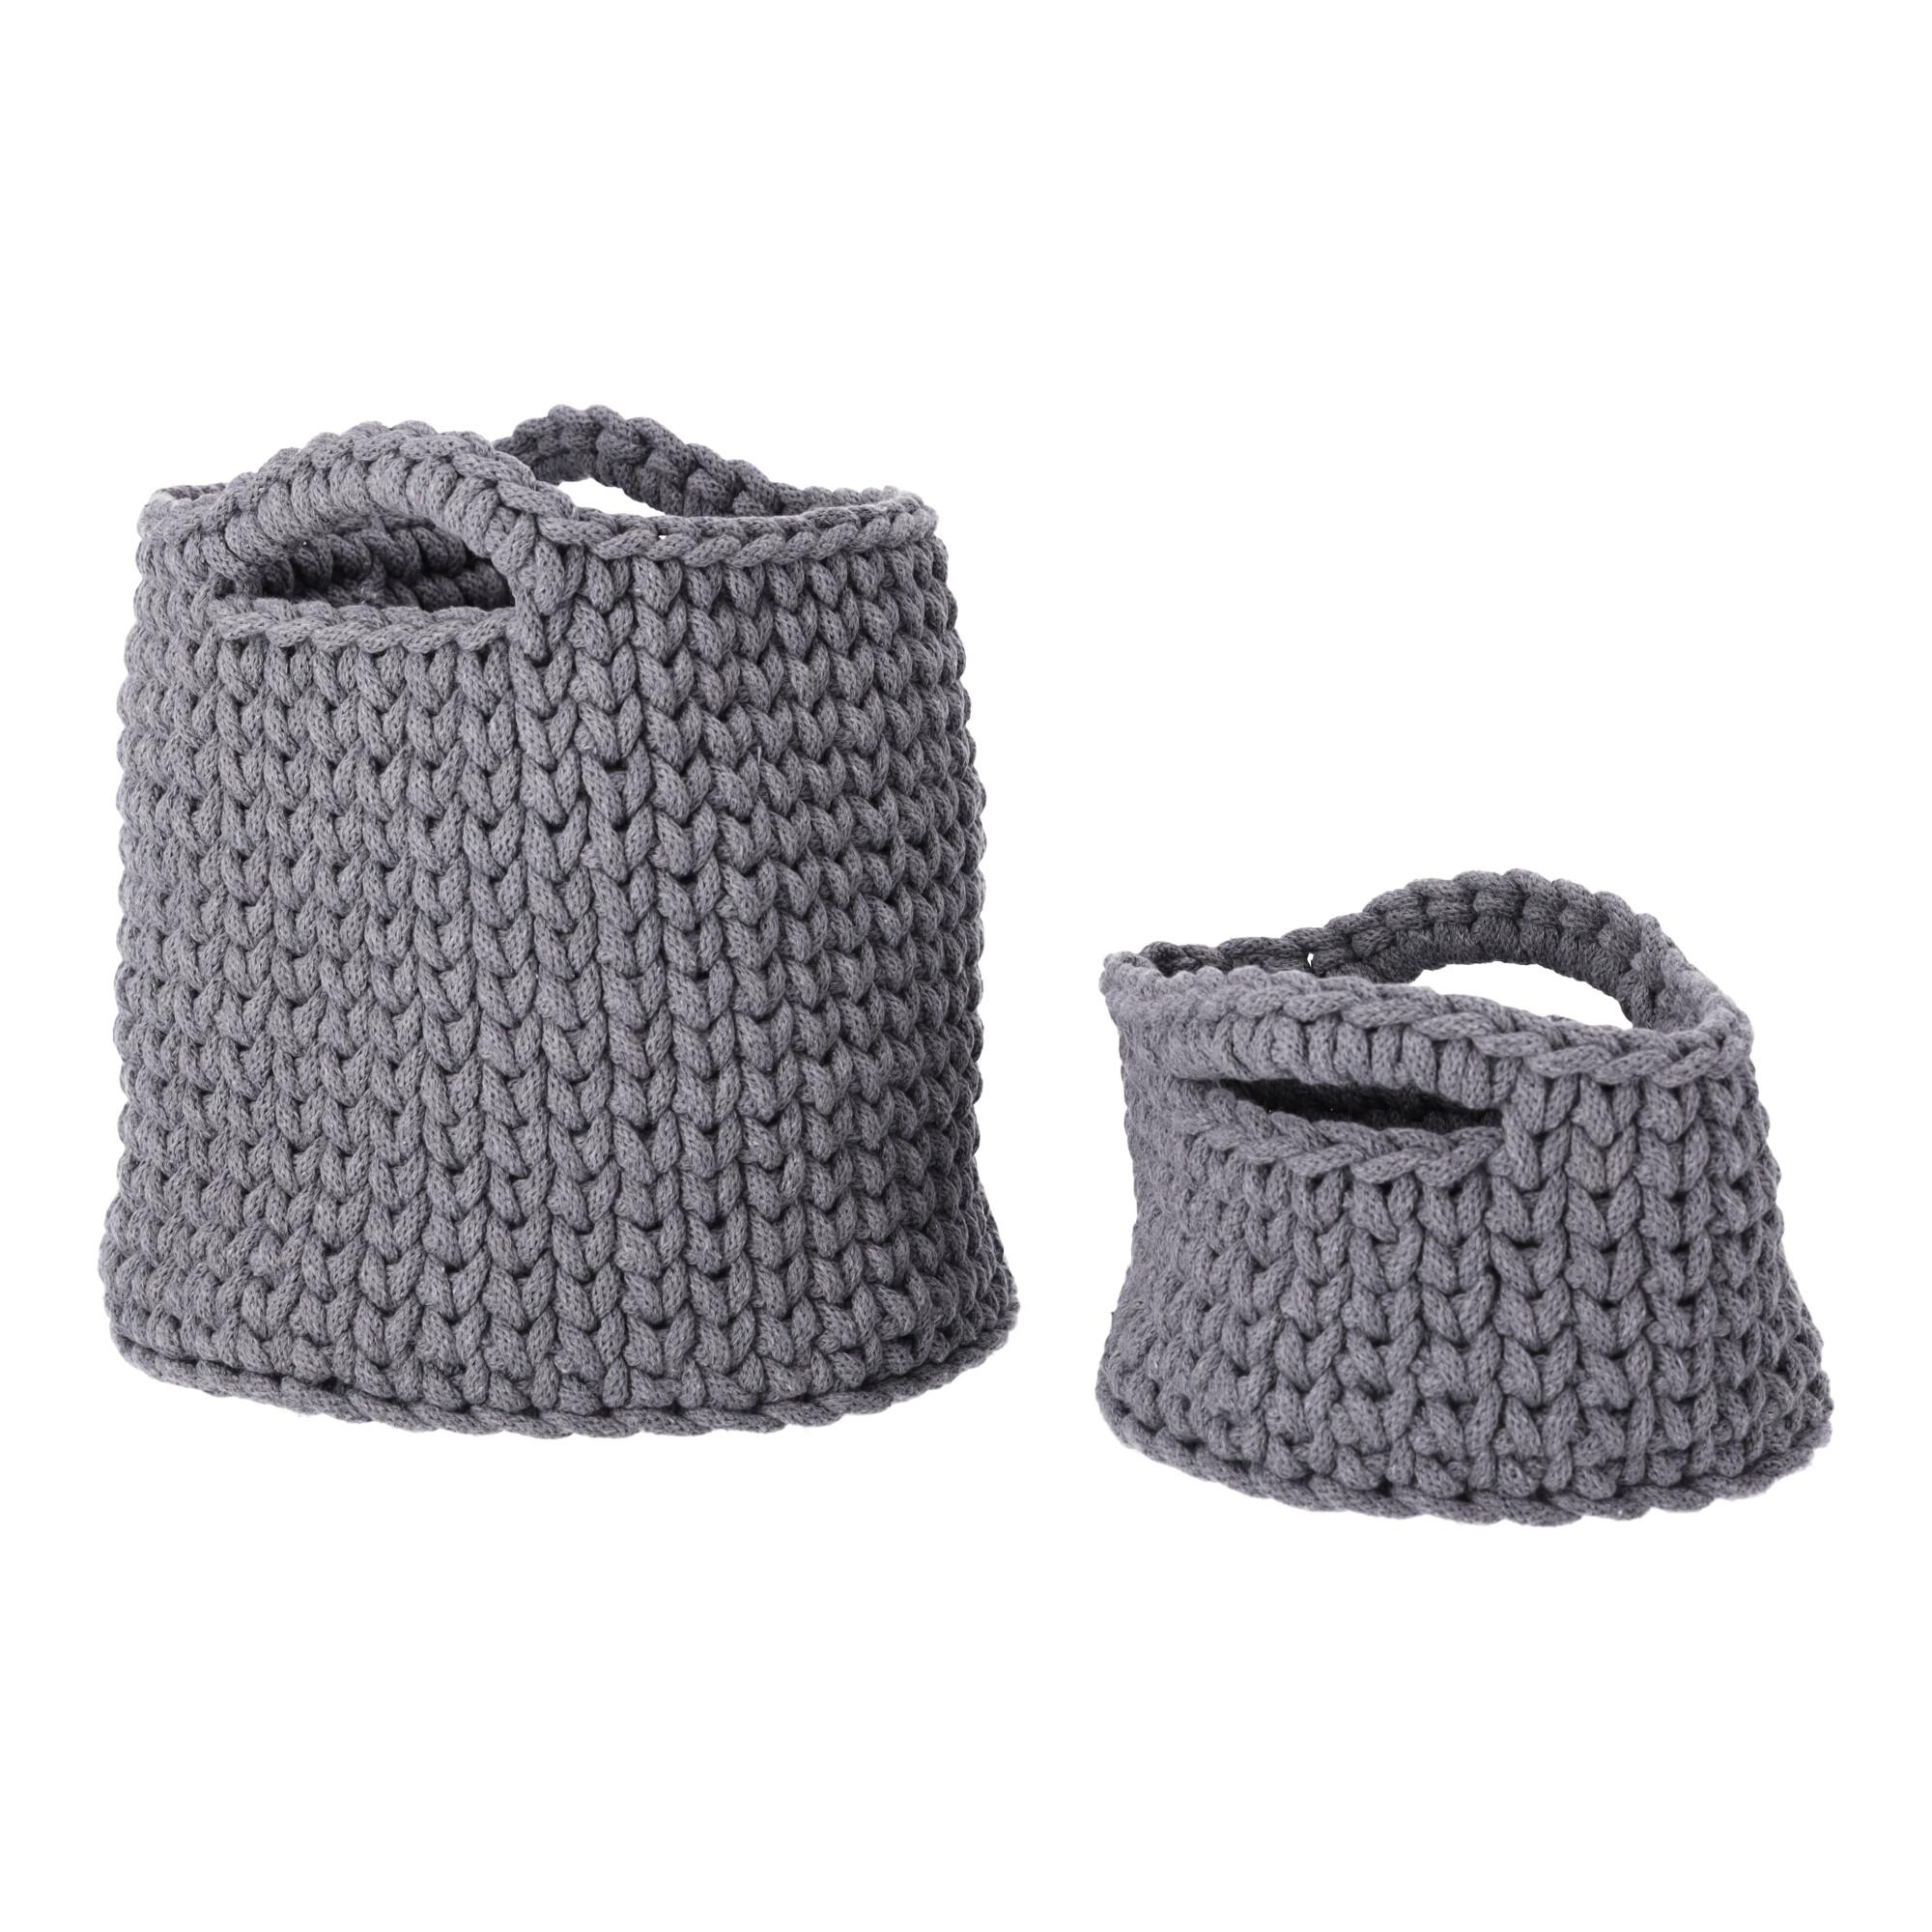 Set of 2in1 braided drawstring baskets - graphite